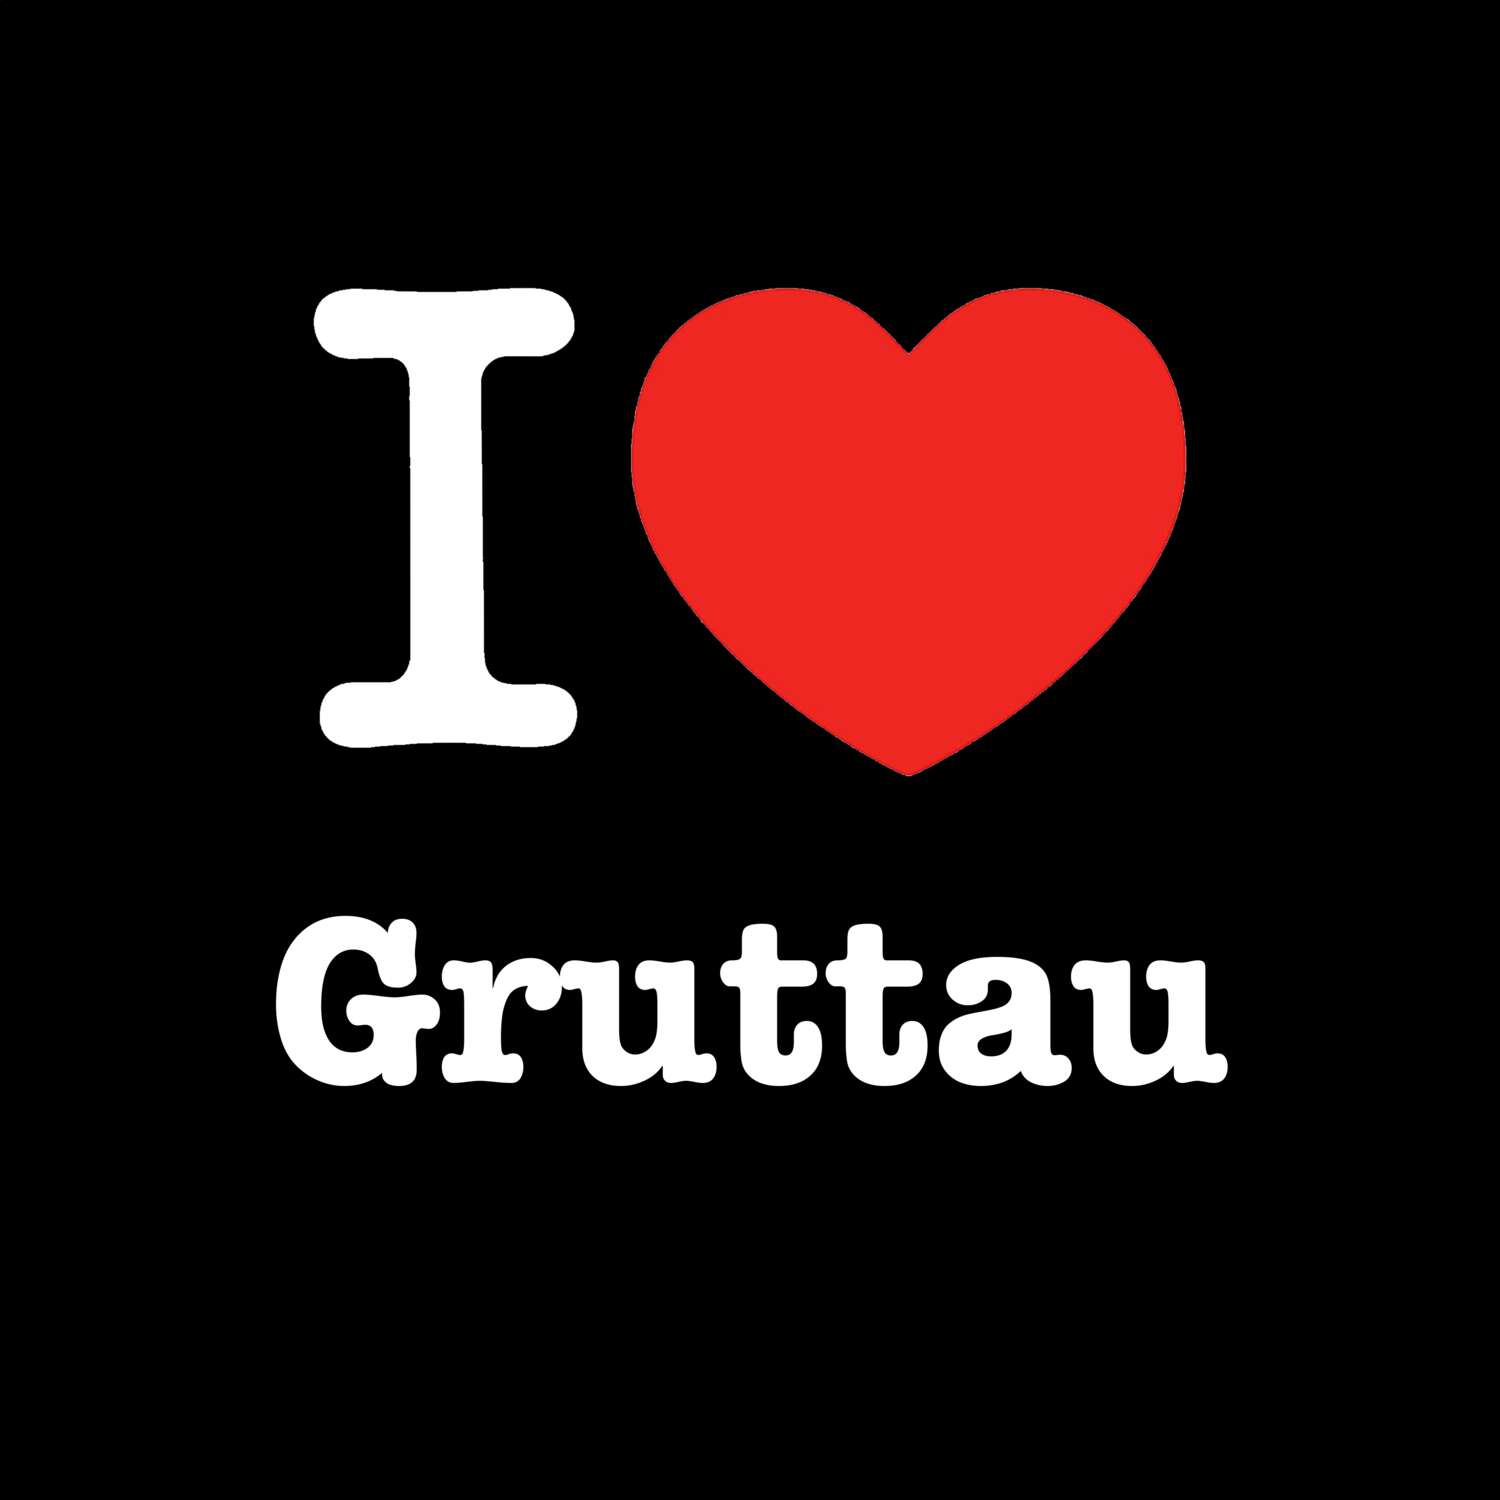 Gruttau T-Shirt »I love«